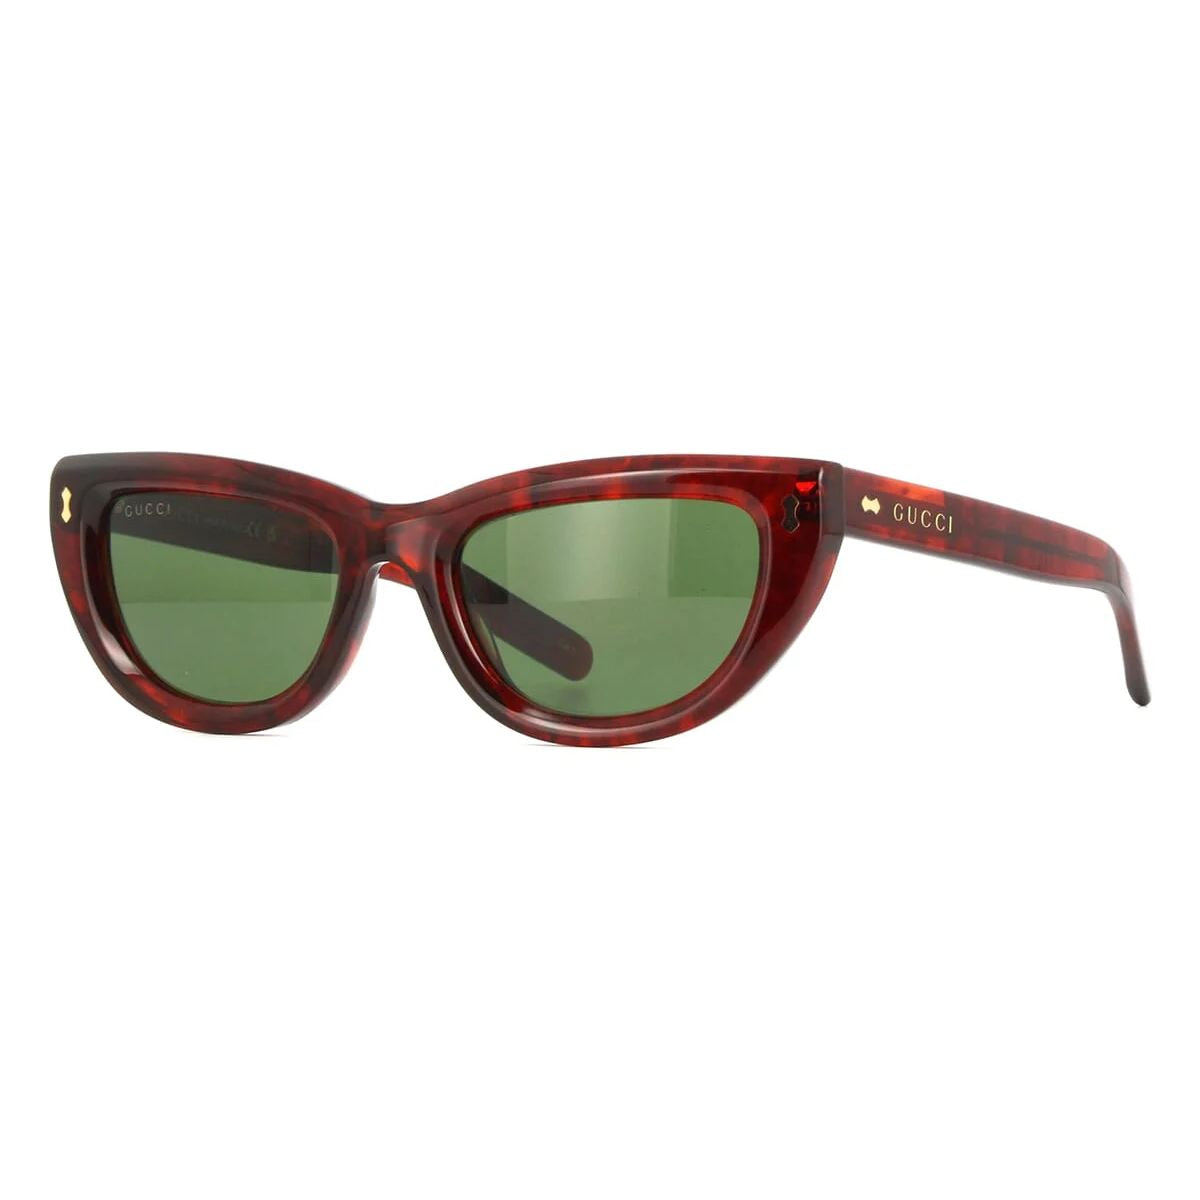 "Stylish Gucci Cat-Eye Sunglasses For Women's | Optorium"